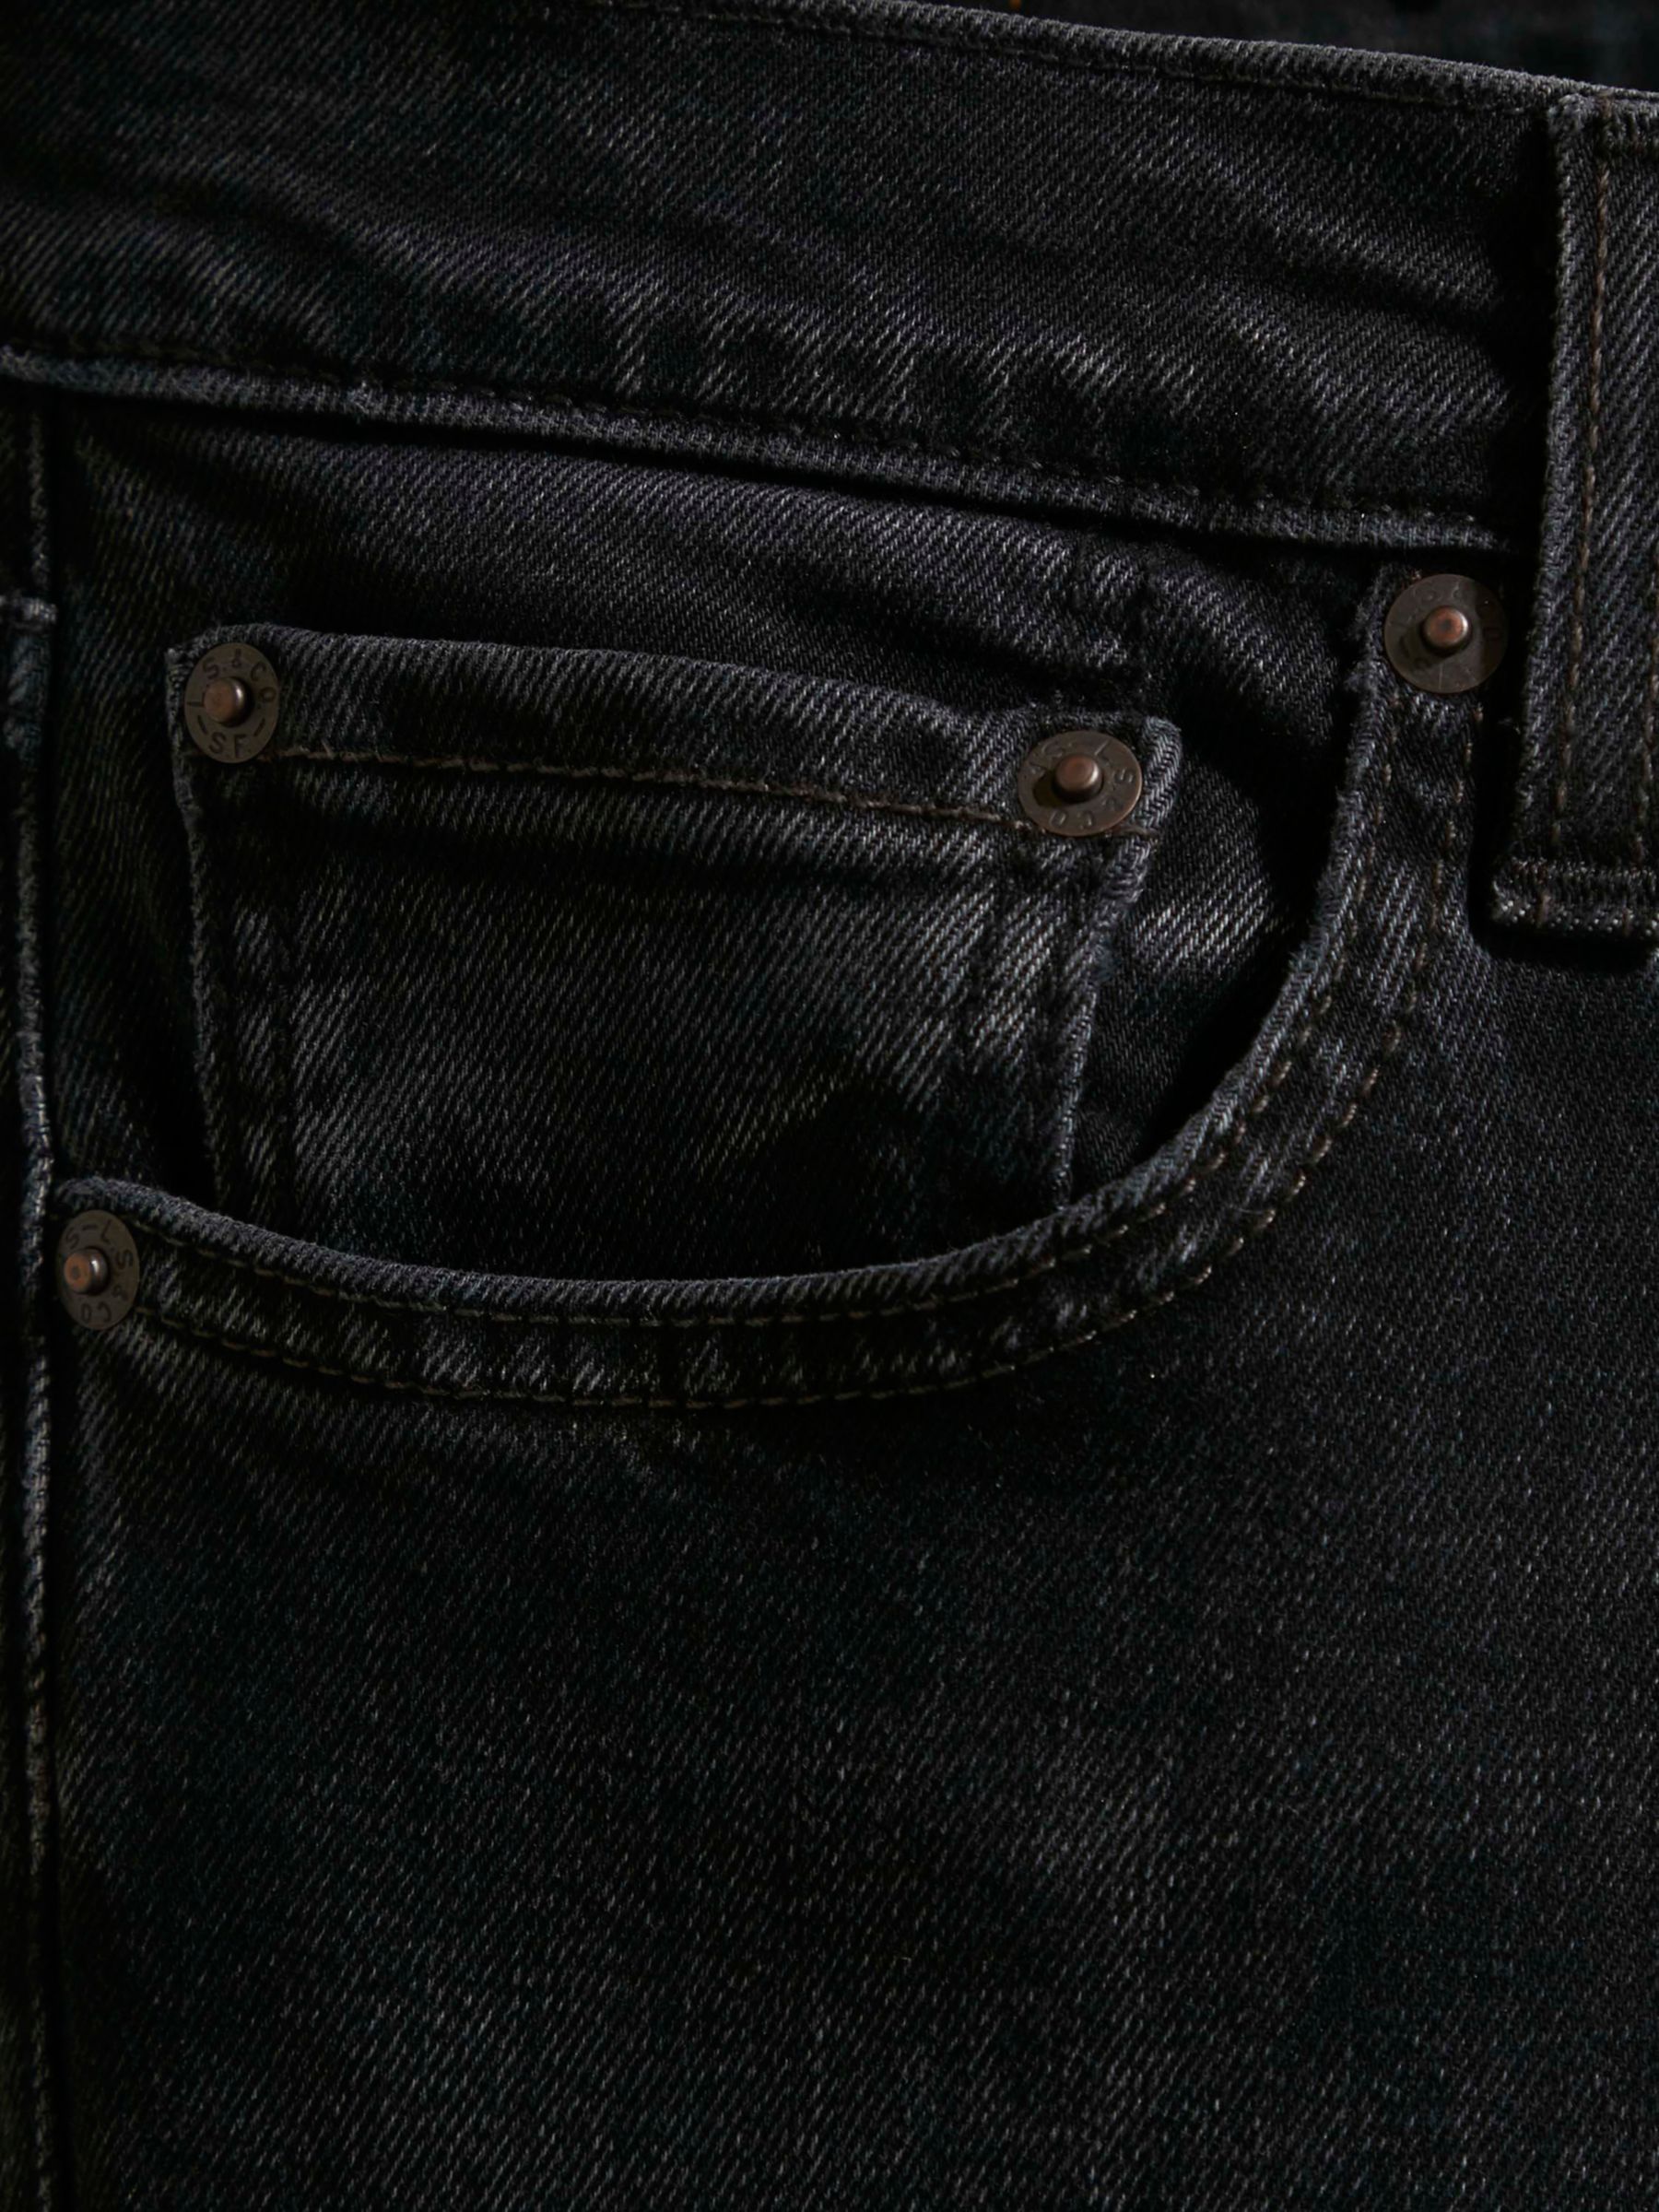 Levi's 511 Slim Fit Jeans, Caboose